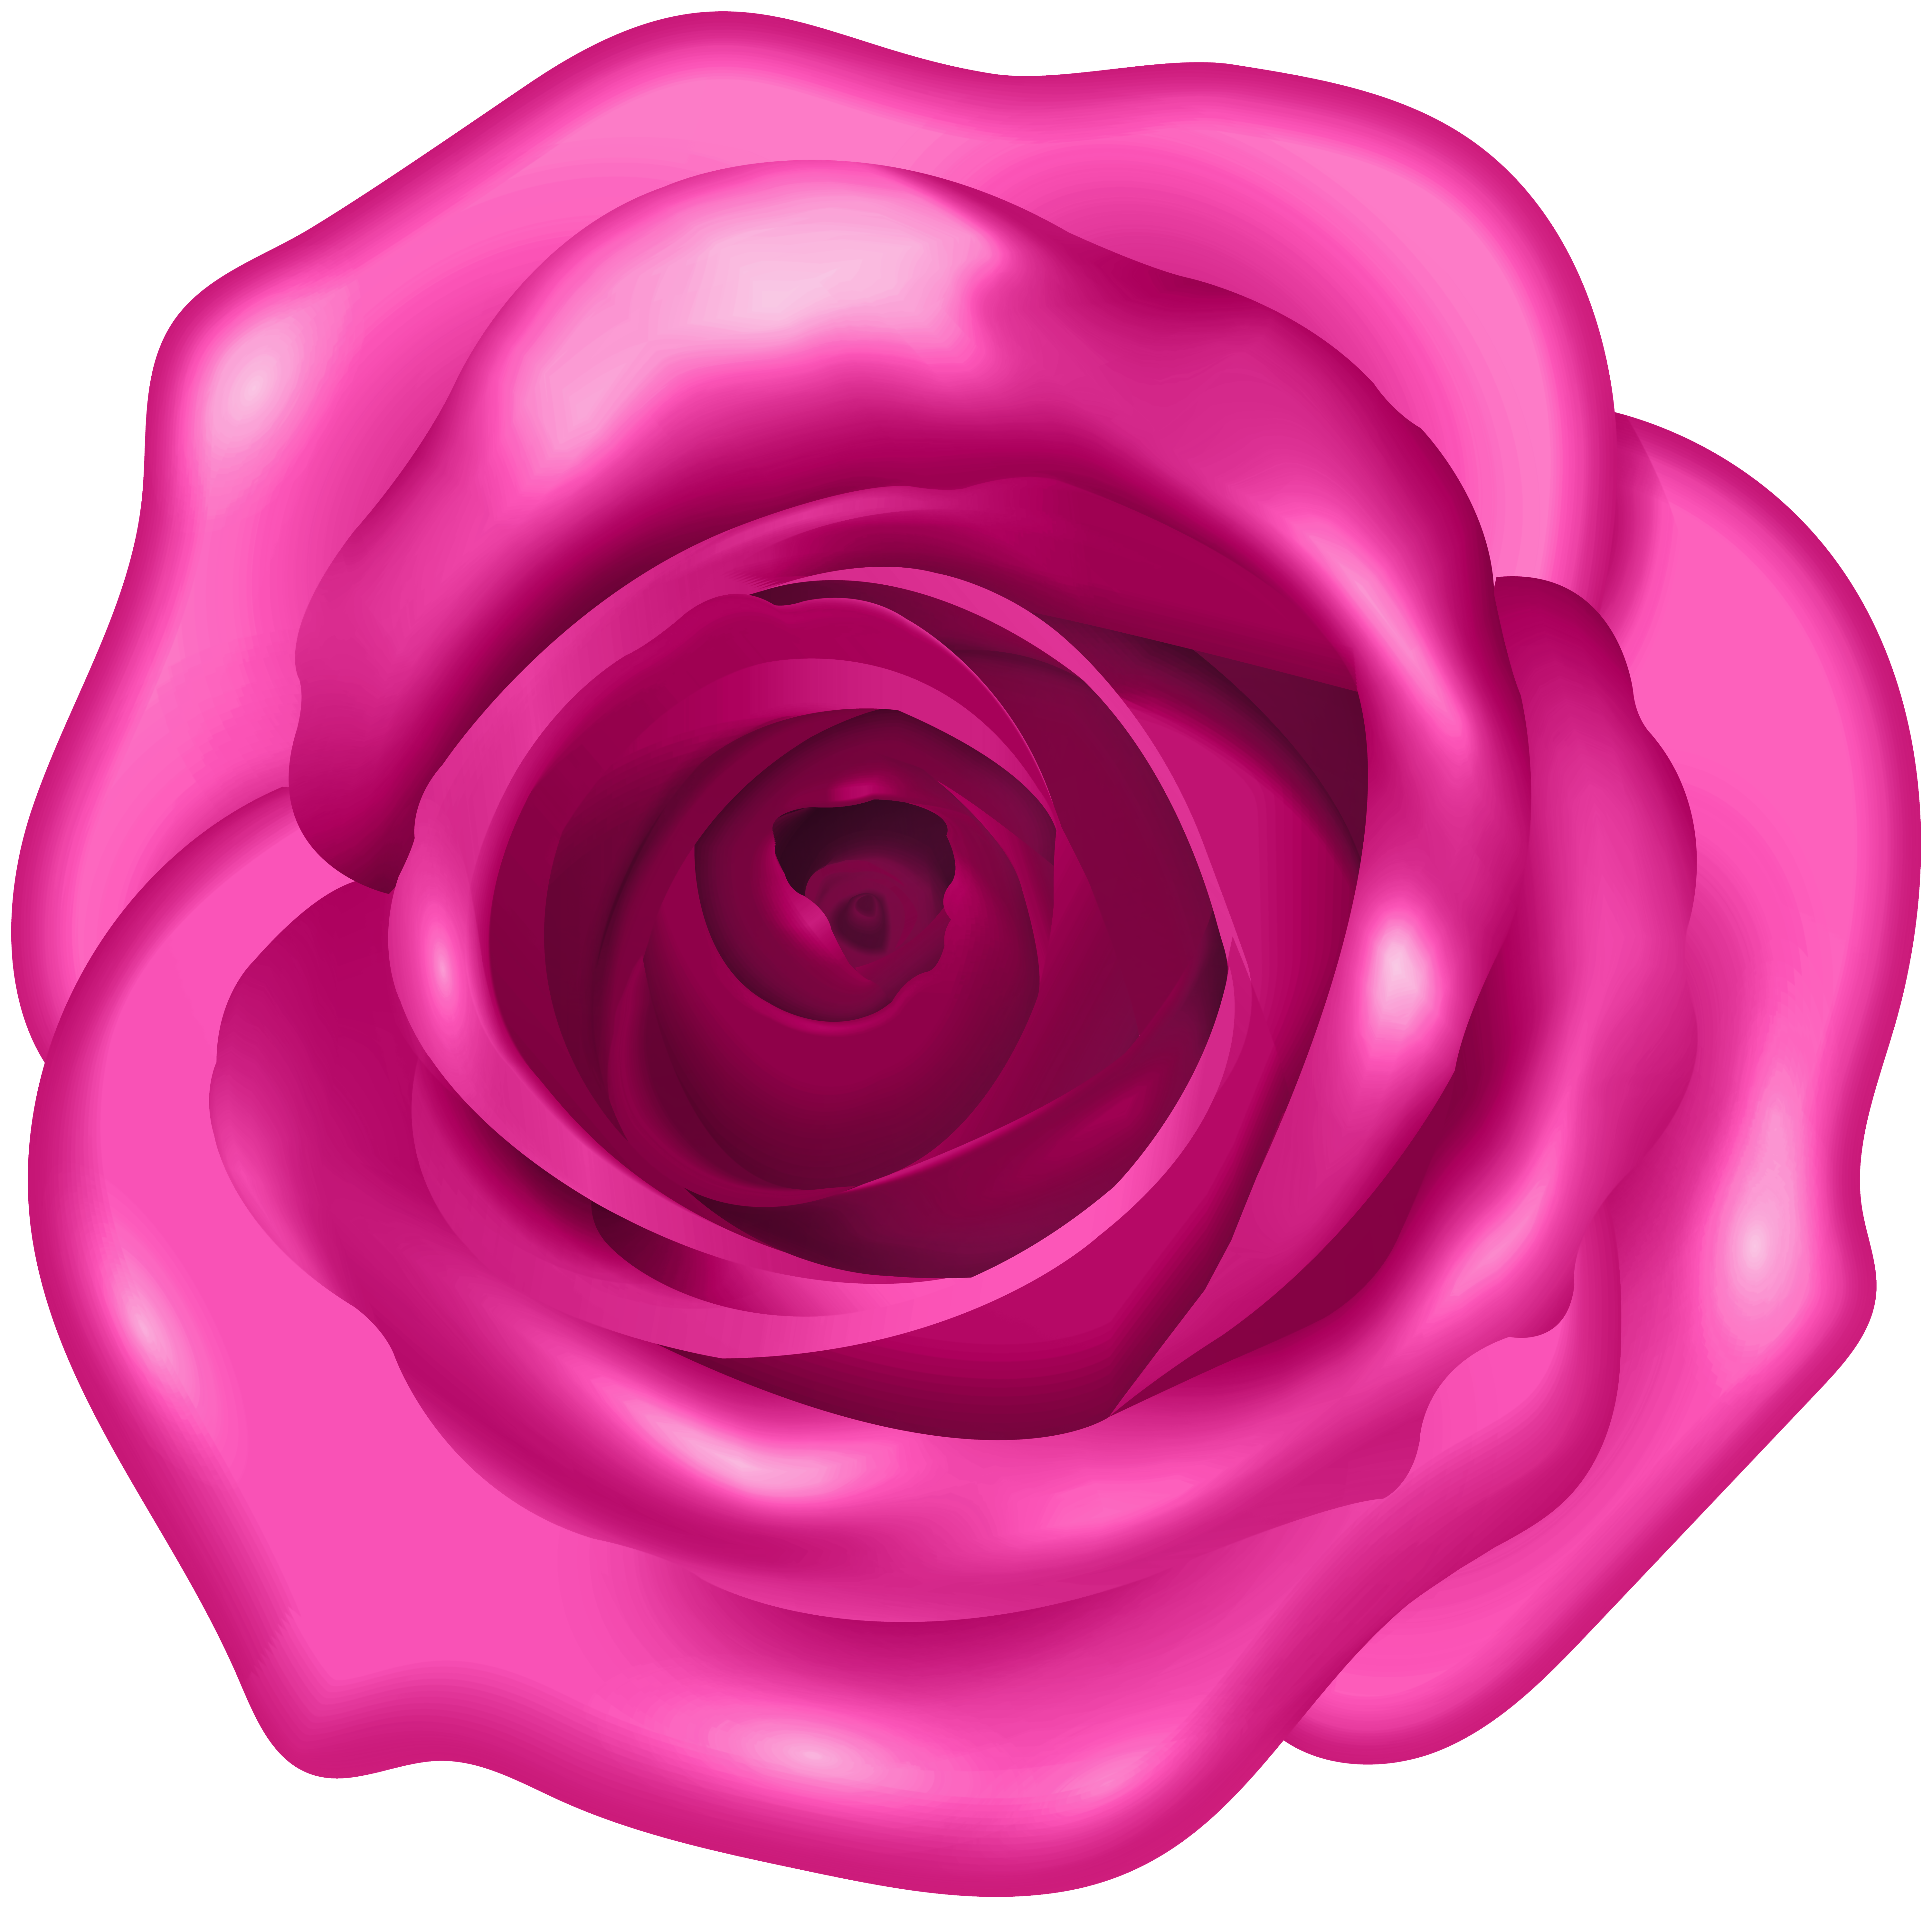 pink tea rose clipart with transparent